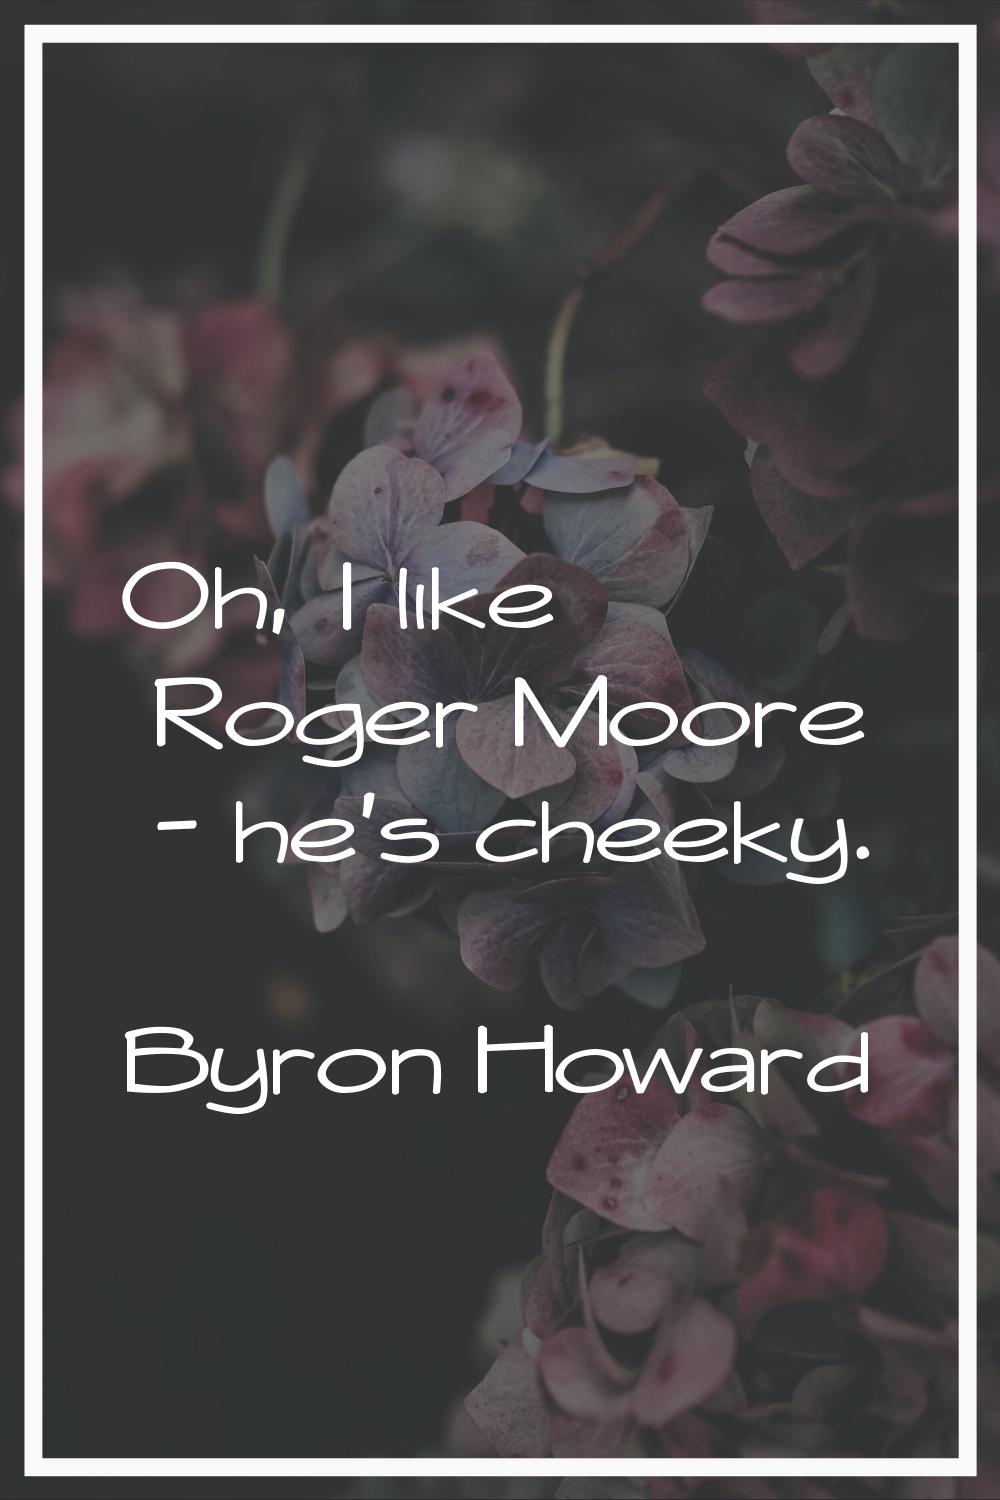 Oh, I like Roger Moore - he's cheeky.